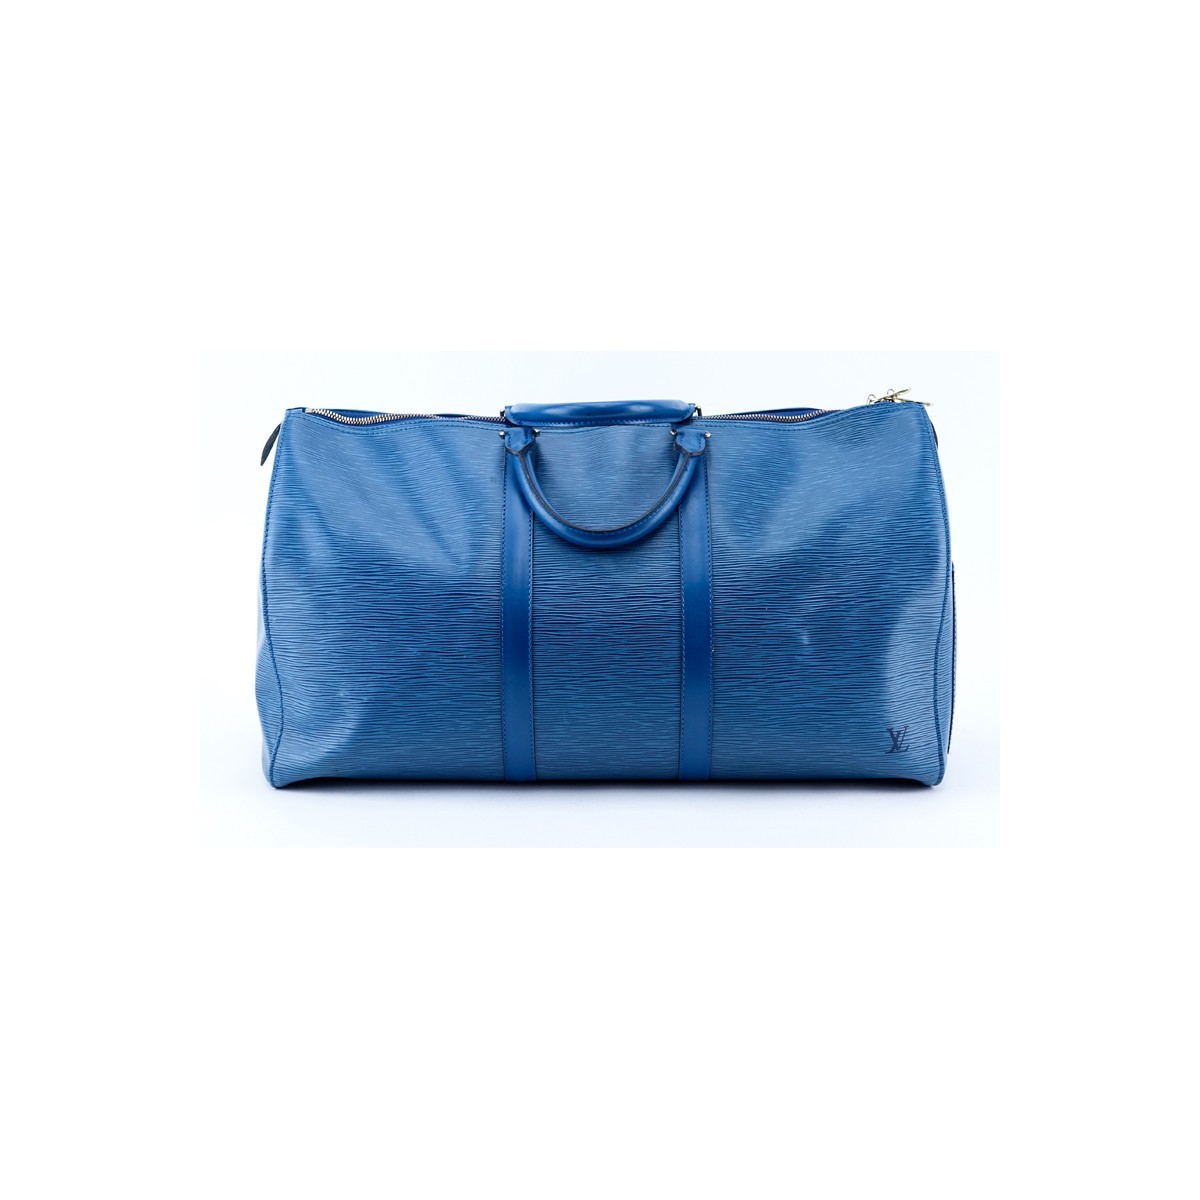 Louis Vuitton Blue Epi Leather Keepall 50 Travel Bag. Golden brass hardware, leather interior, luggage tag, handle strap, cadenas & keys.